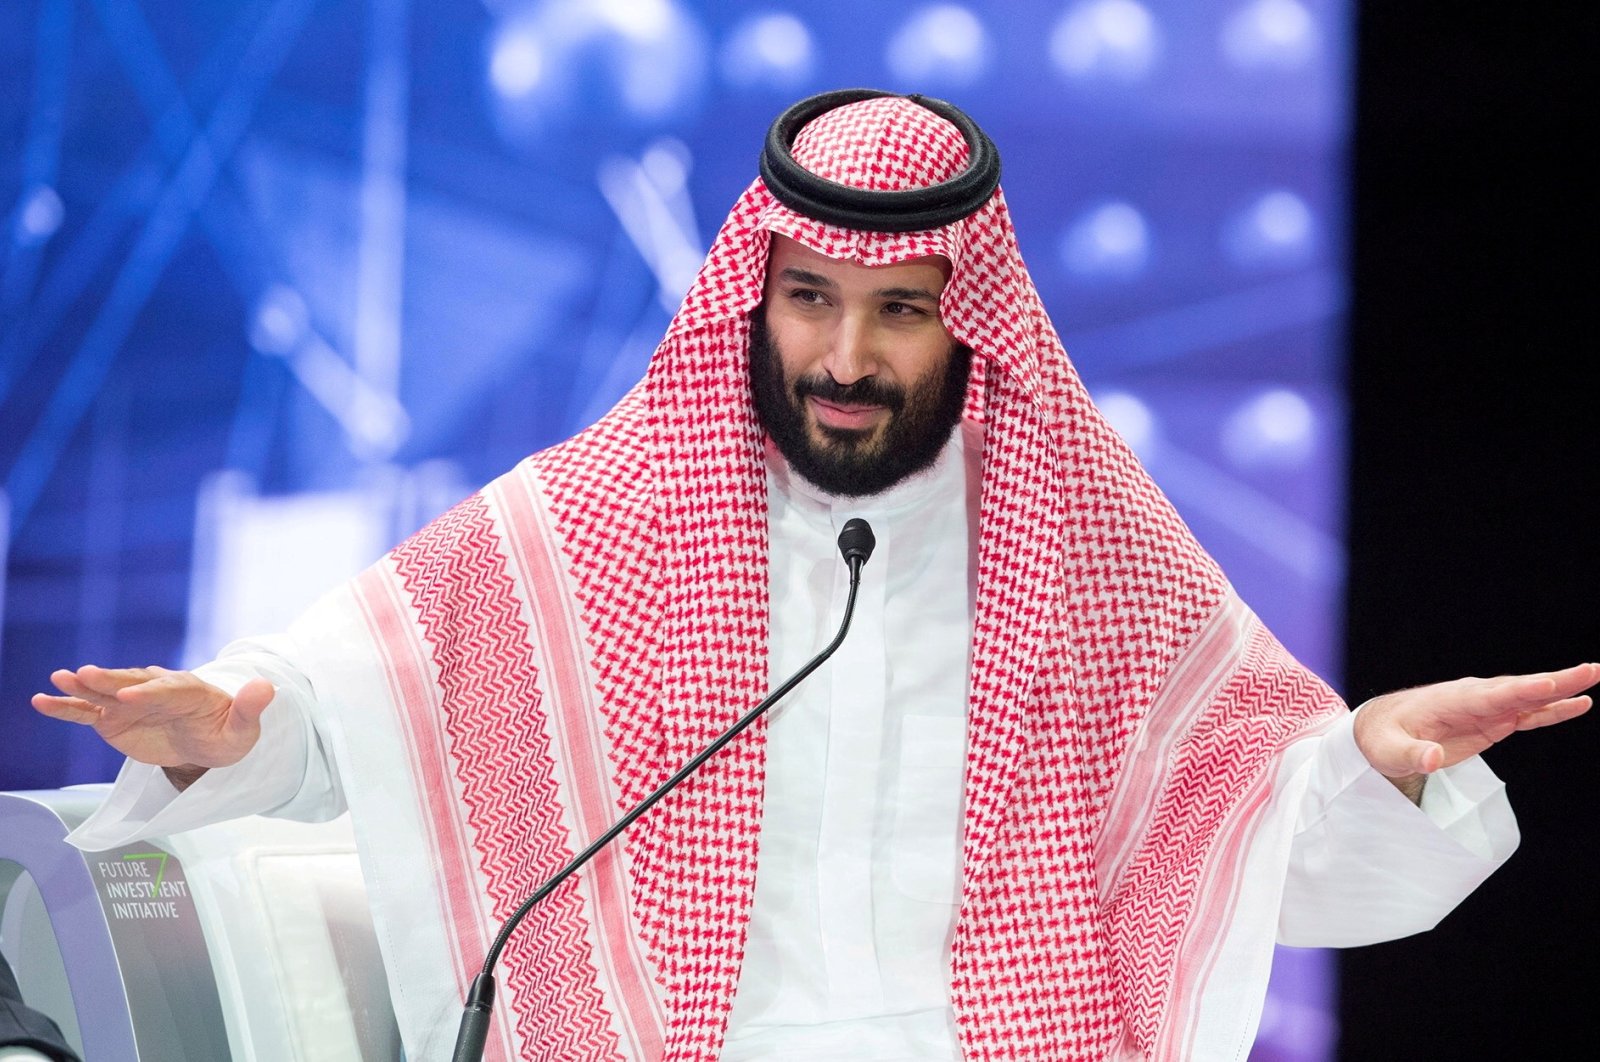 Saudi Crown Prince Mohammed bin Salman speaks during the Future Investment Initiative Forum in Riyadh, Saudi Arabia, Oct. 24, 2018. (Reuters Photo)